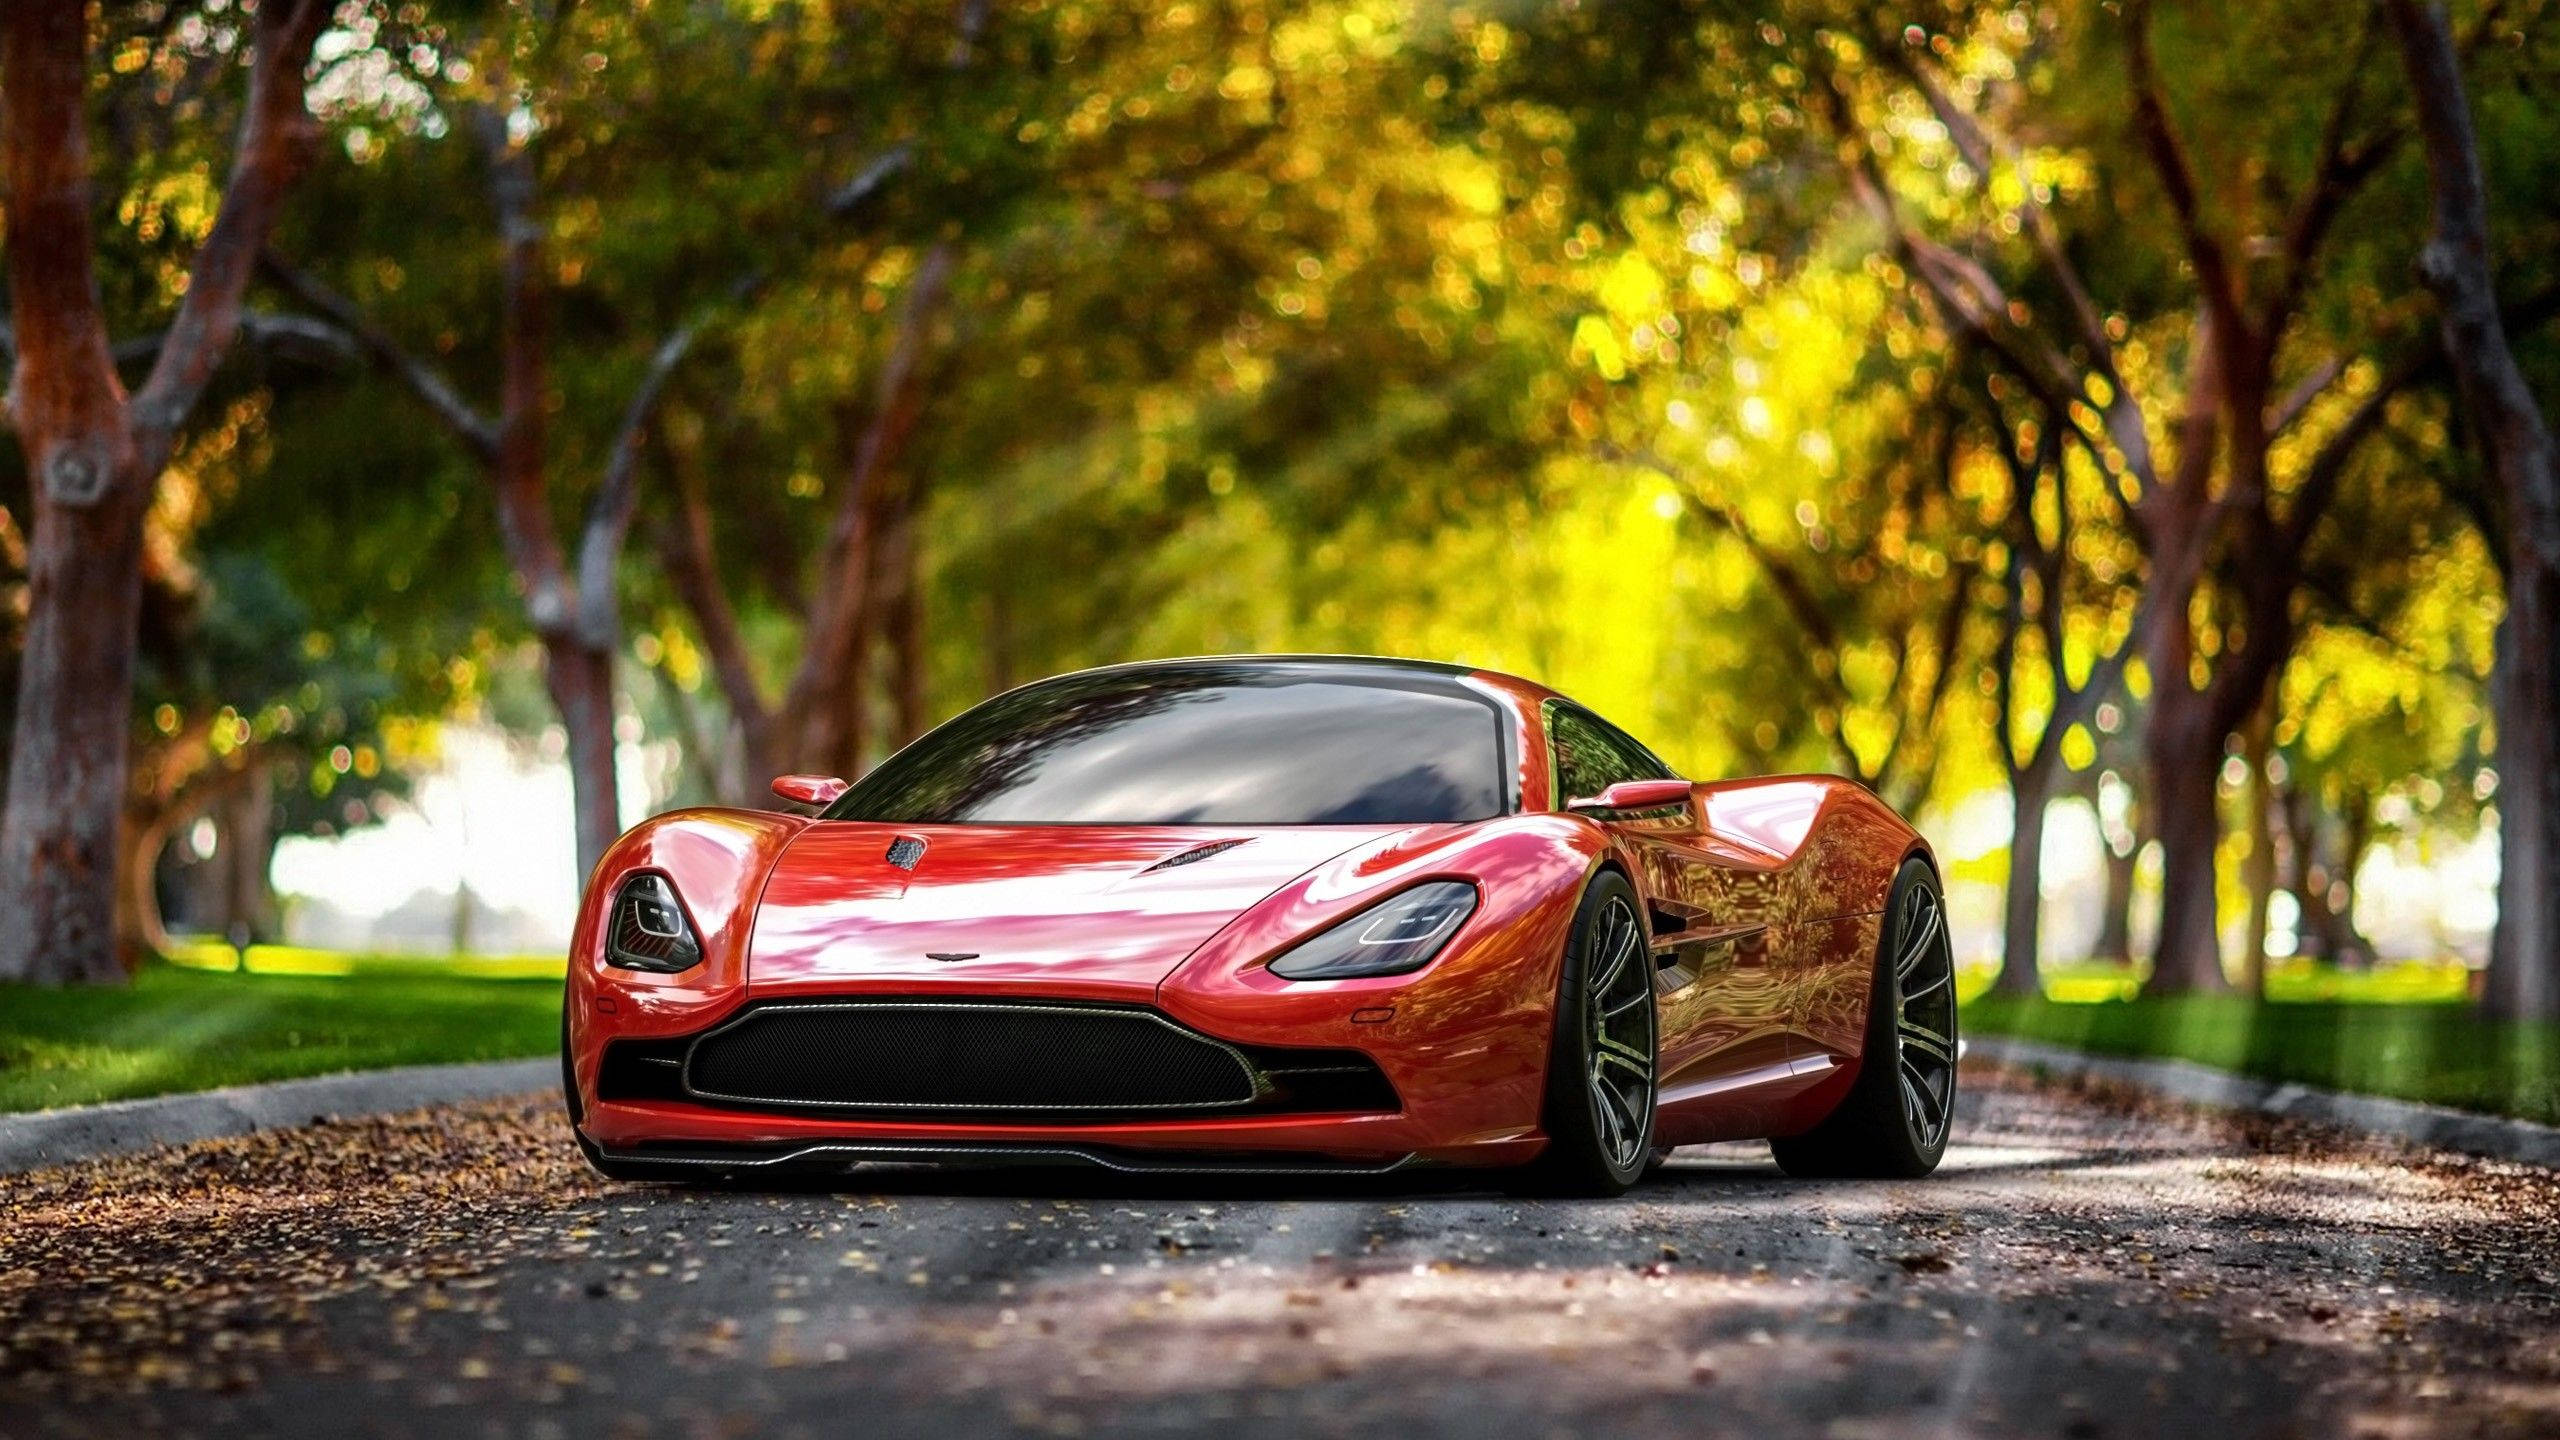 2560x1440 Car Red Aston Martin Dbc Background